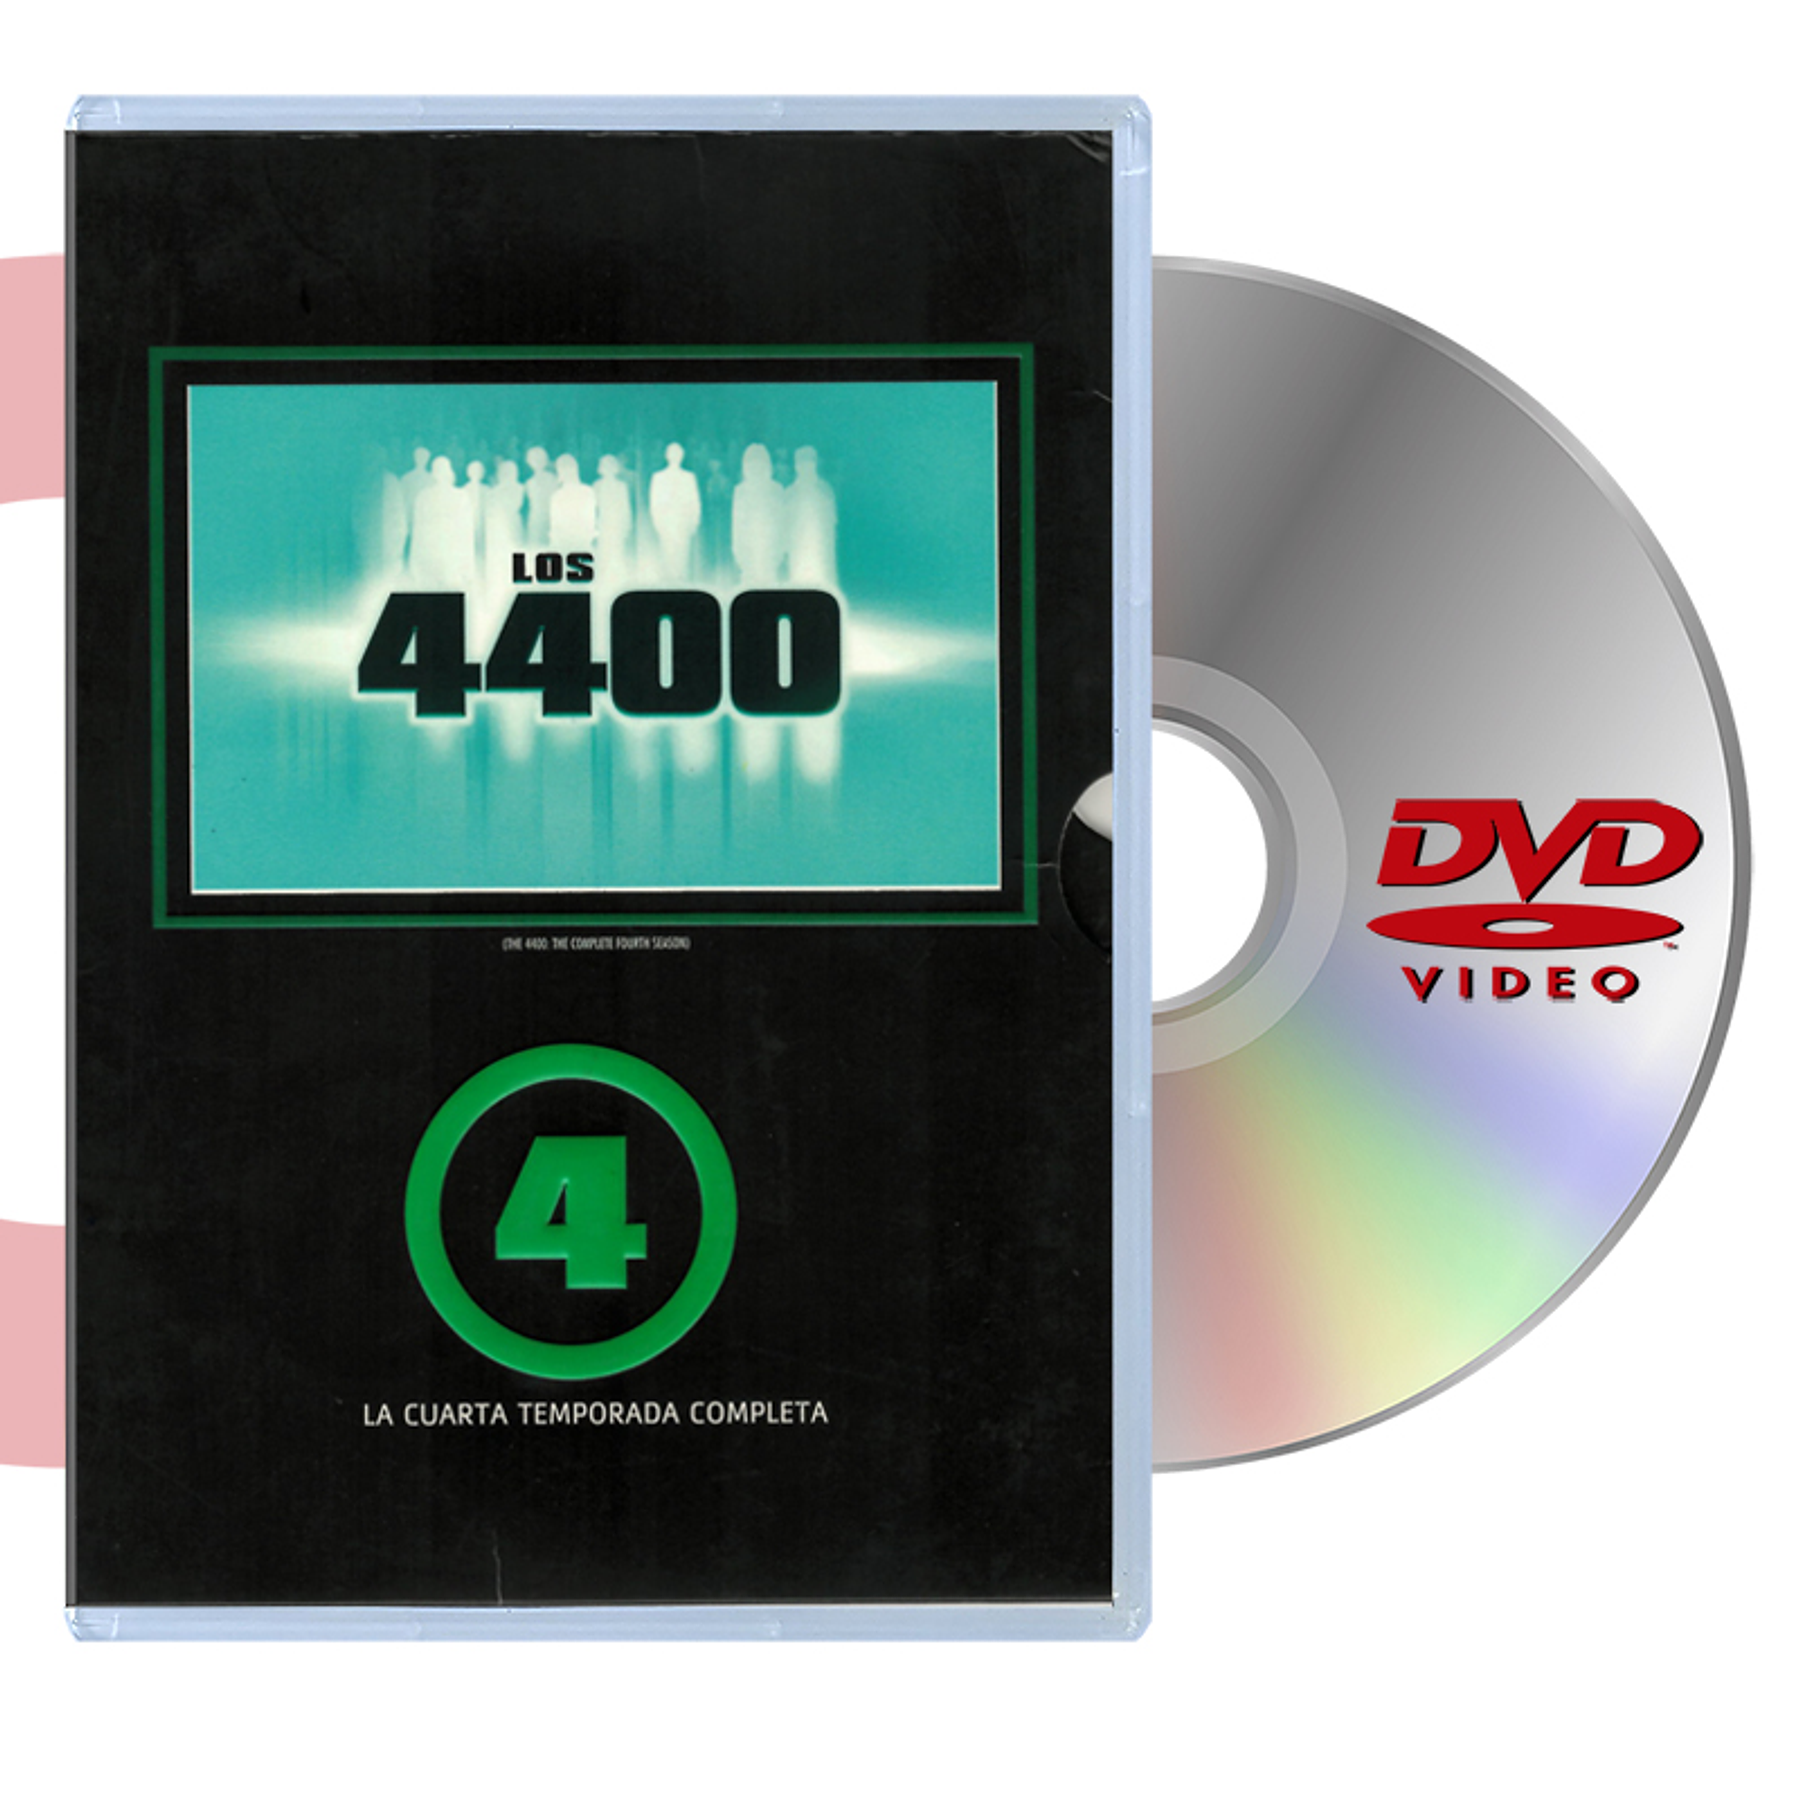 DVD 4400 temporada 4